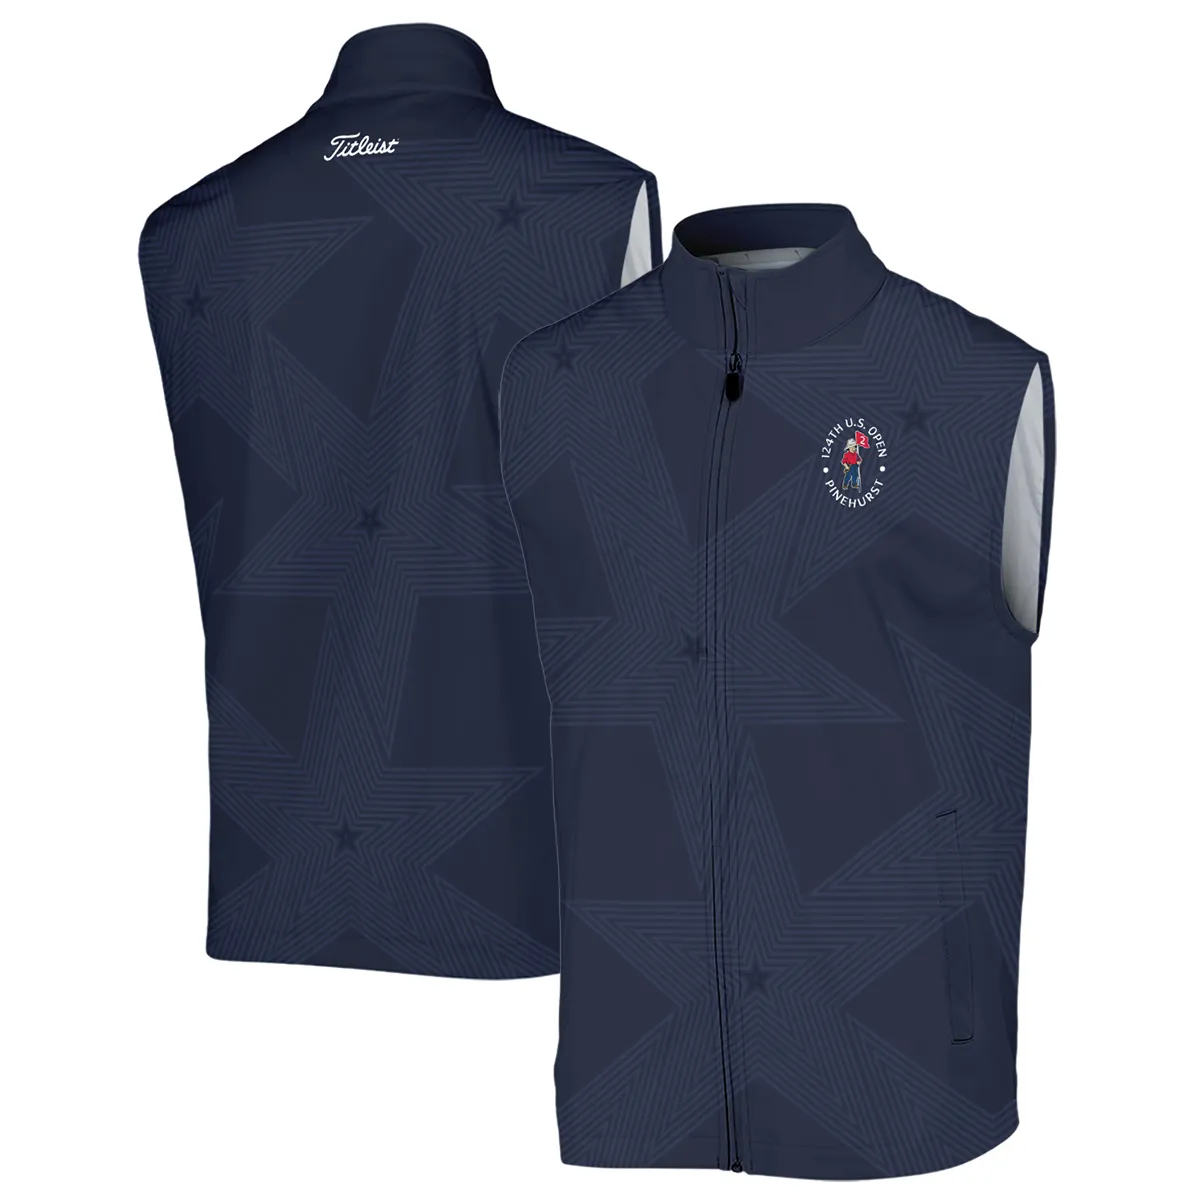 Golf Navy Color Star Pattern 124th U.S. Open Pinehurst Titlest Polo Shirt Style Classic